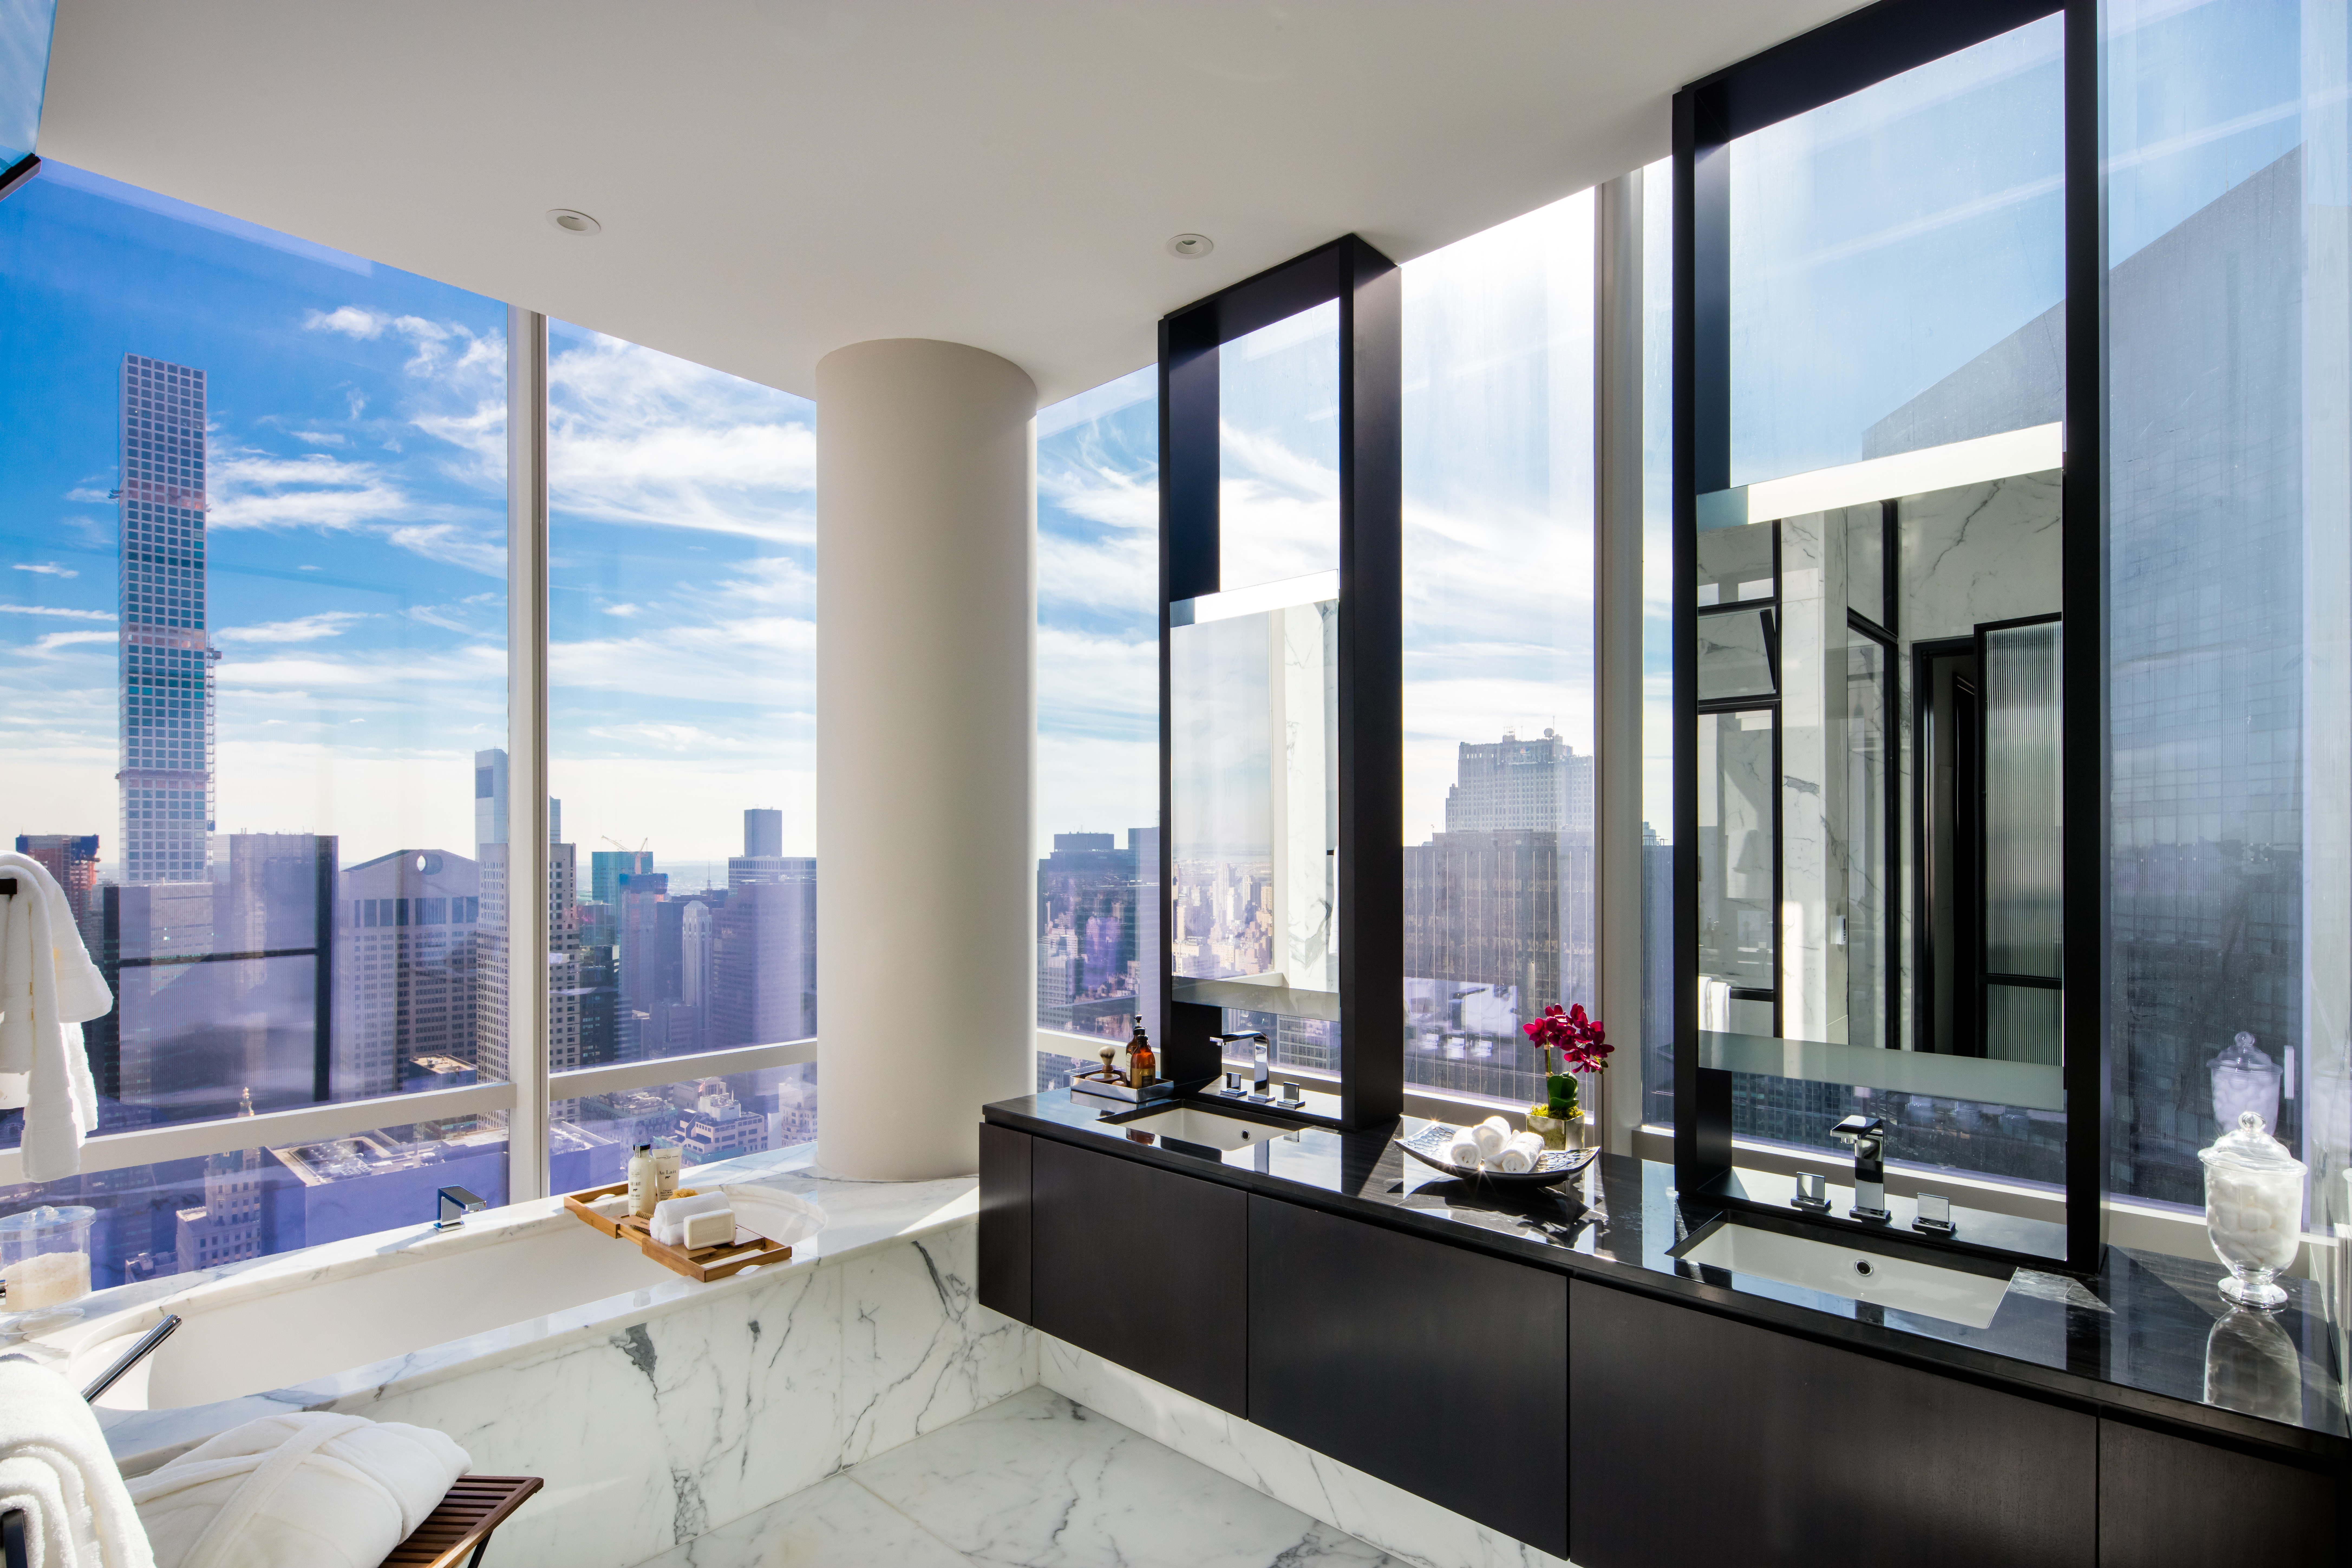 Bathroom at One 57 condos in New York. Marble floors, dark wood double vanity and floor-to-ceilings windows with city views.